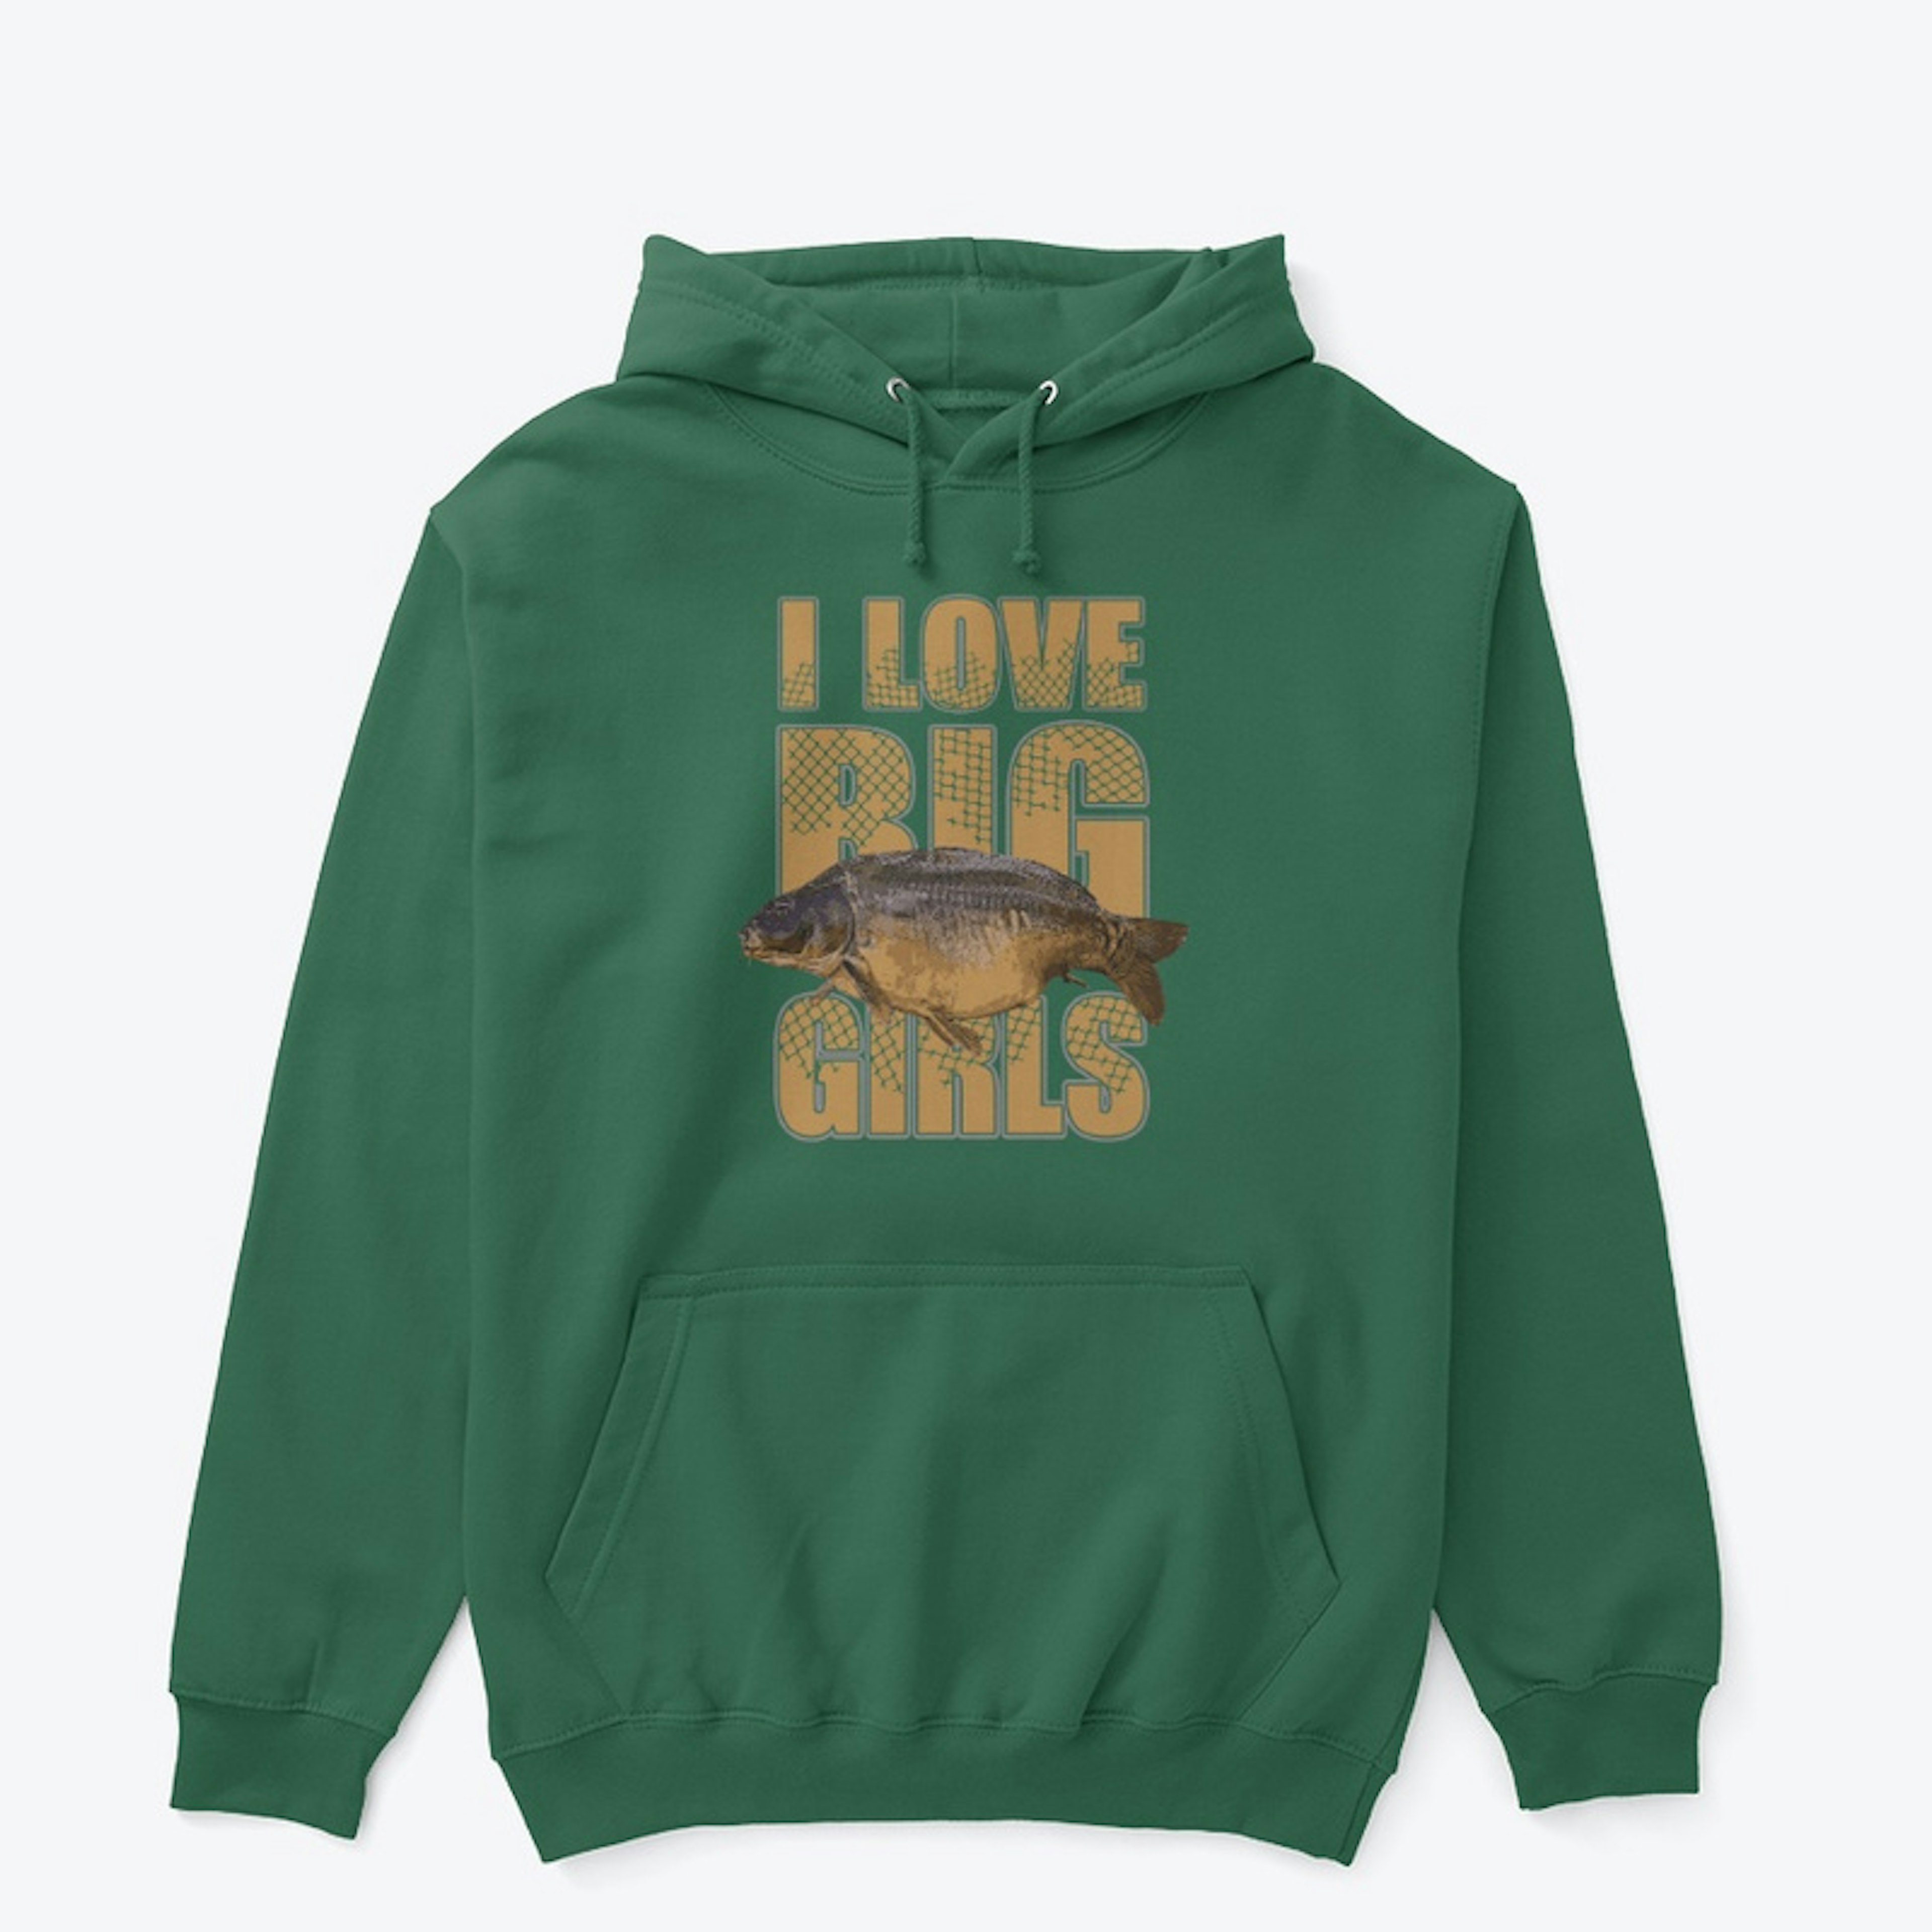 Fishing Shirt - I LOVE BIG GIRLS